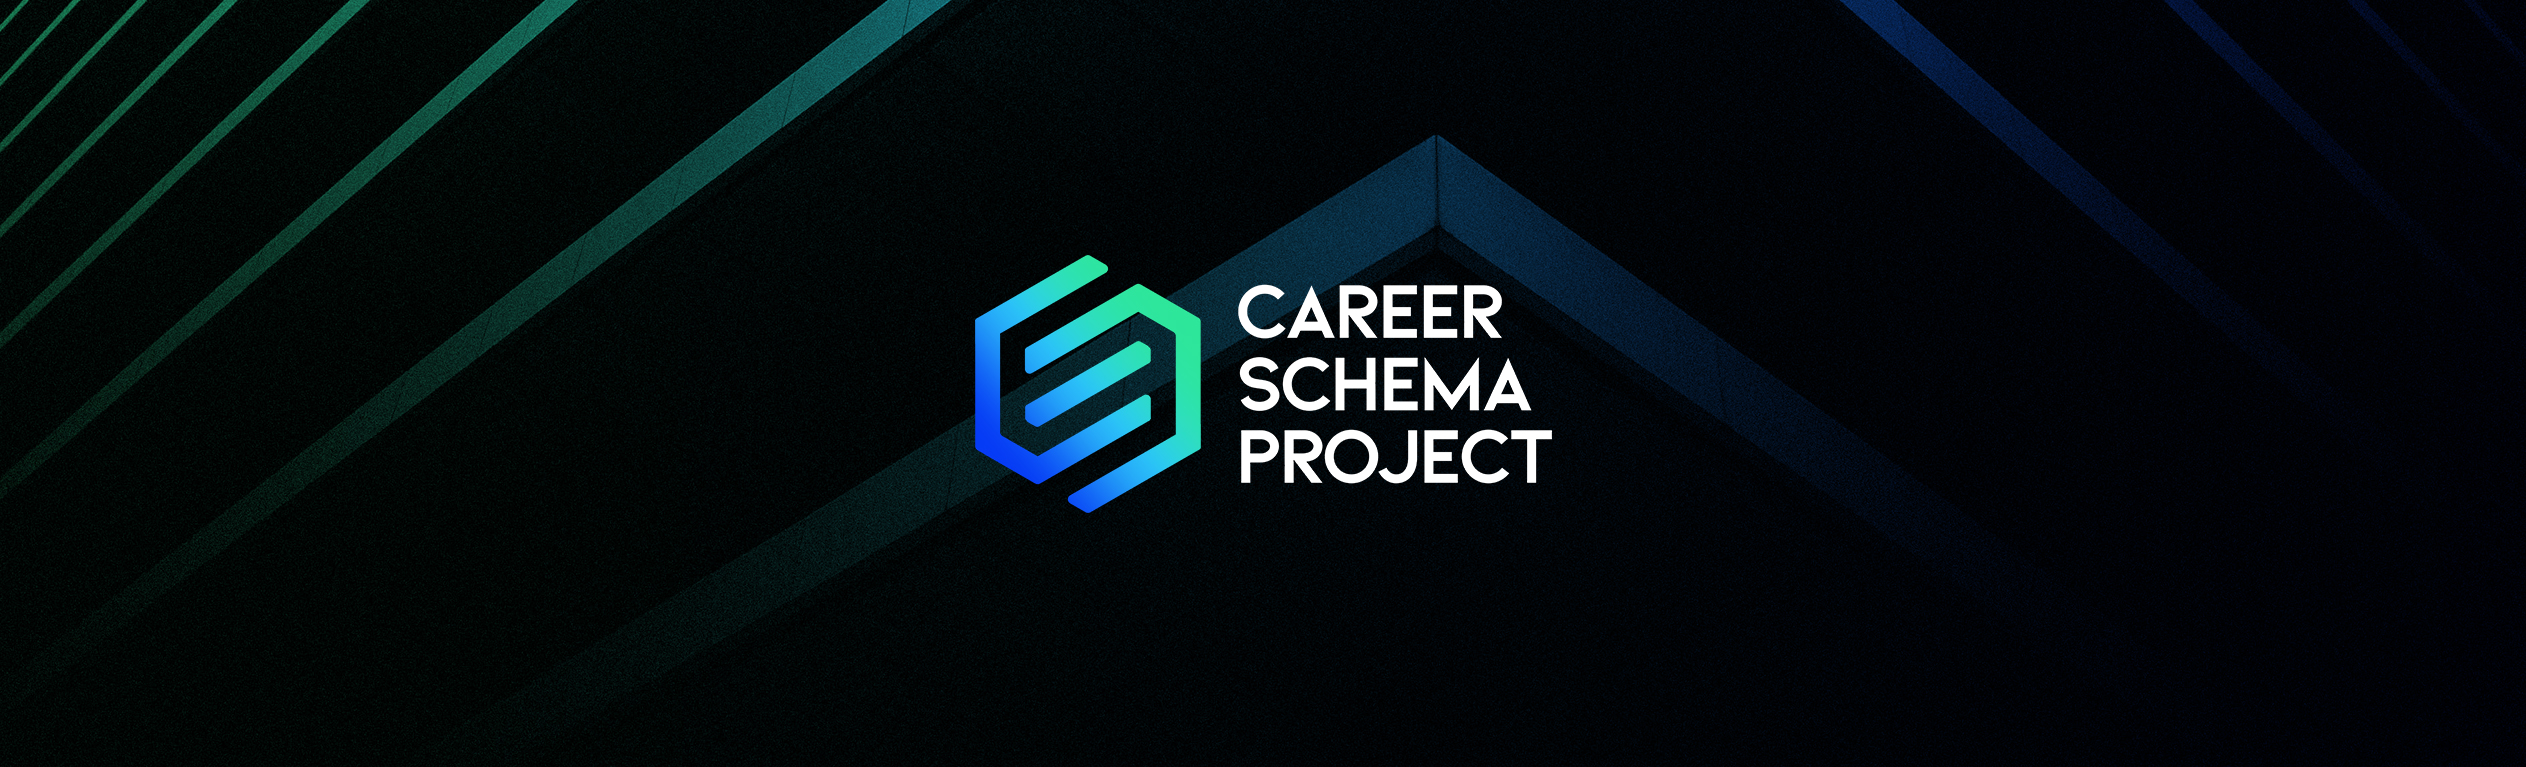 Career Schema Project banner